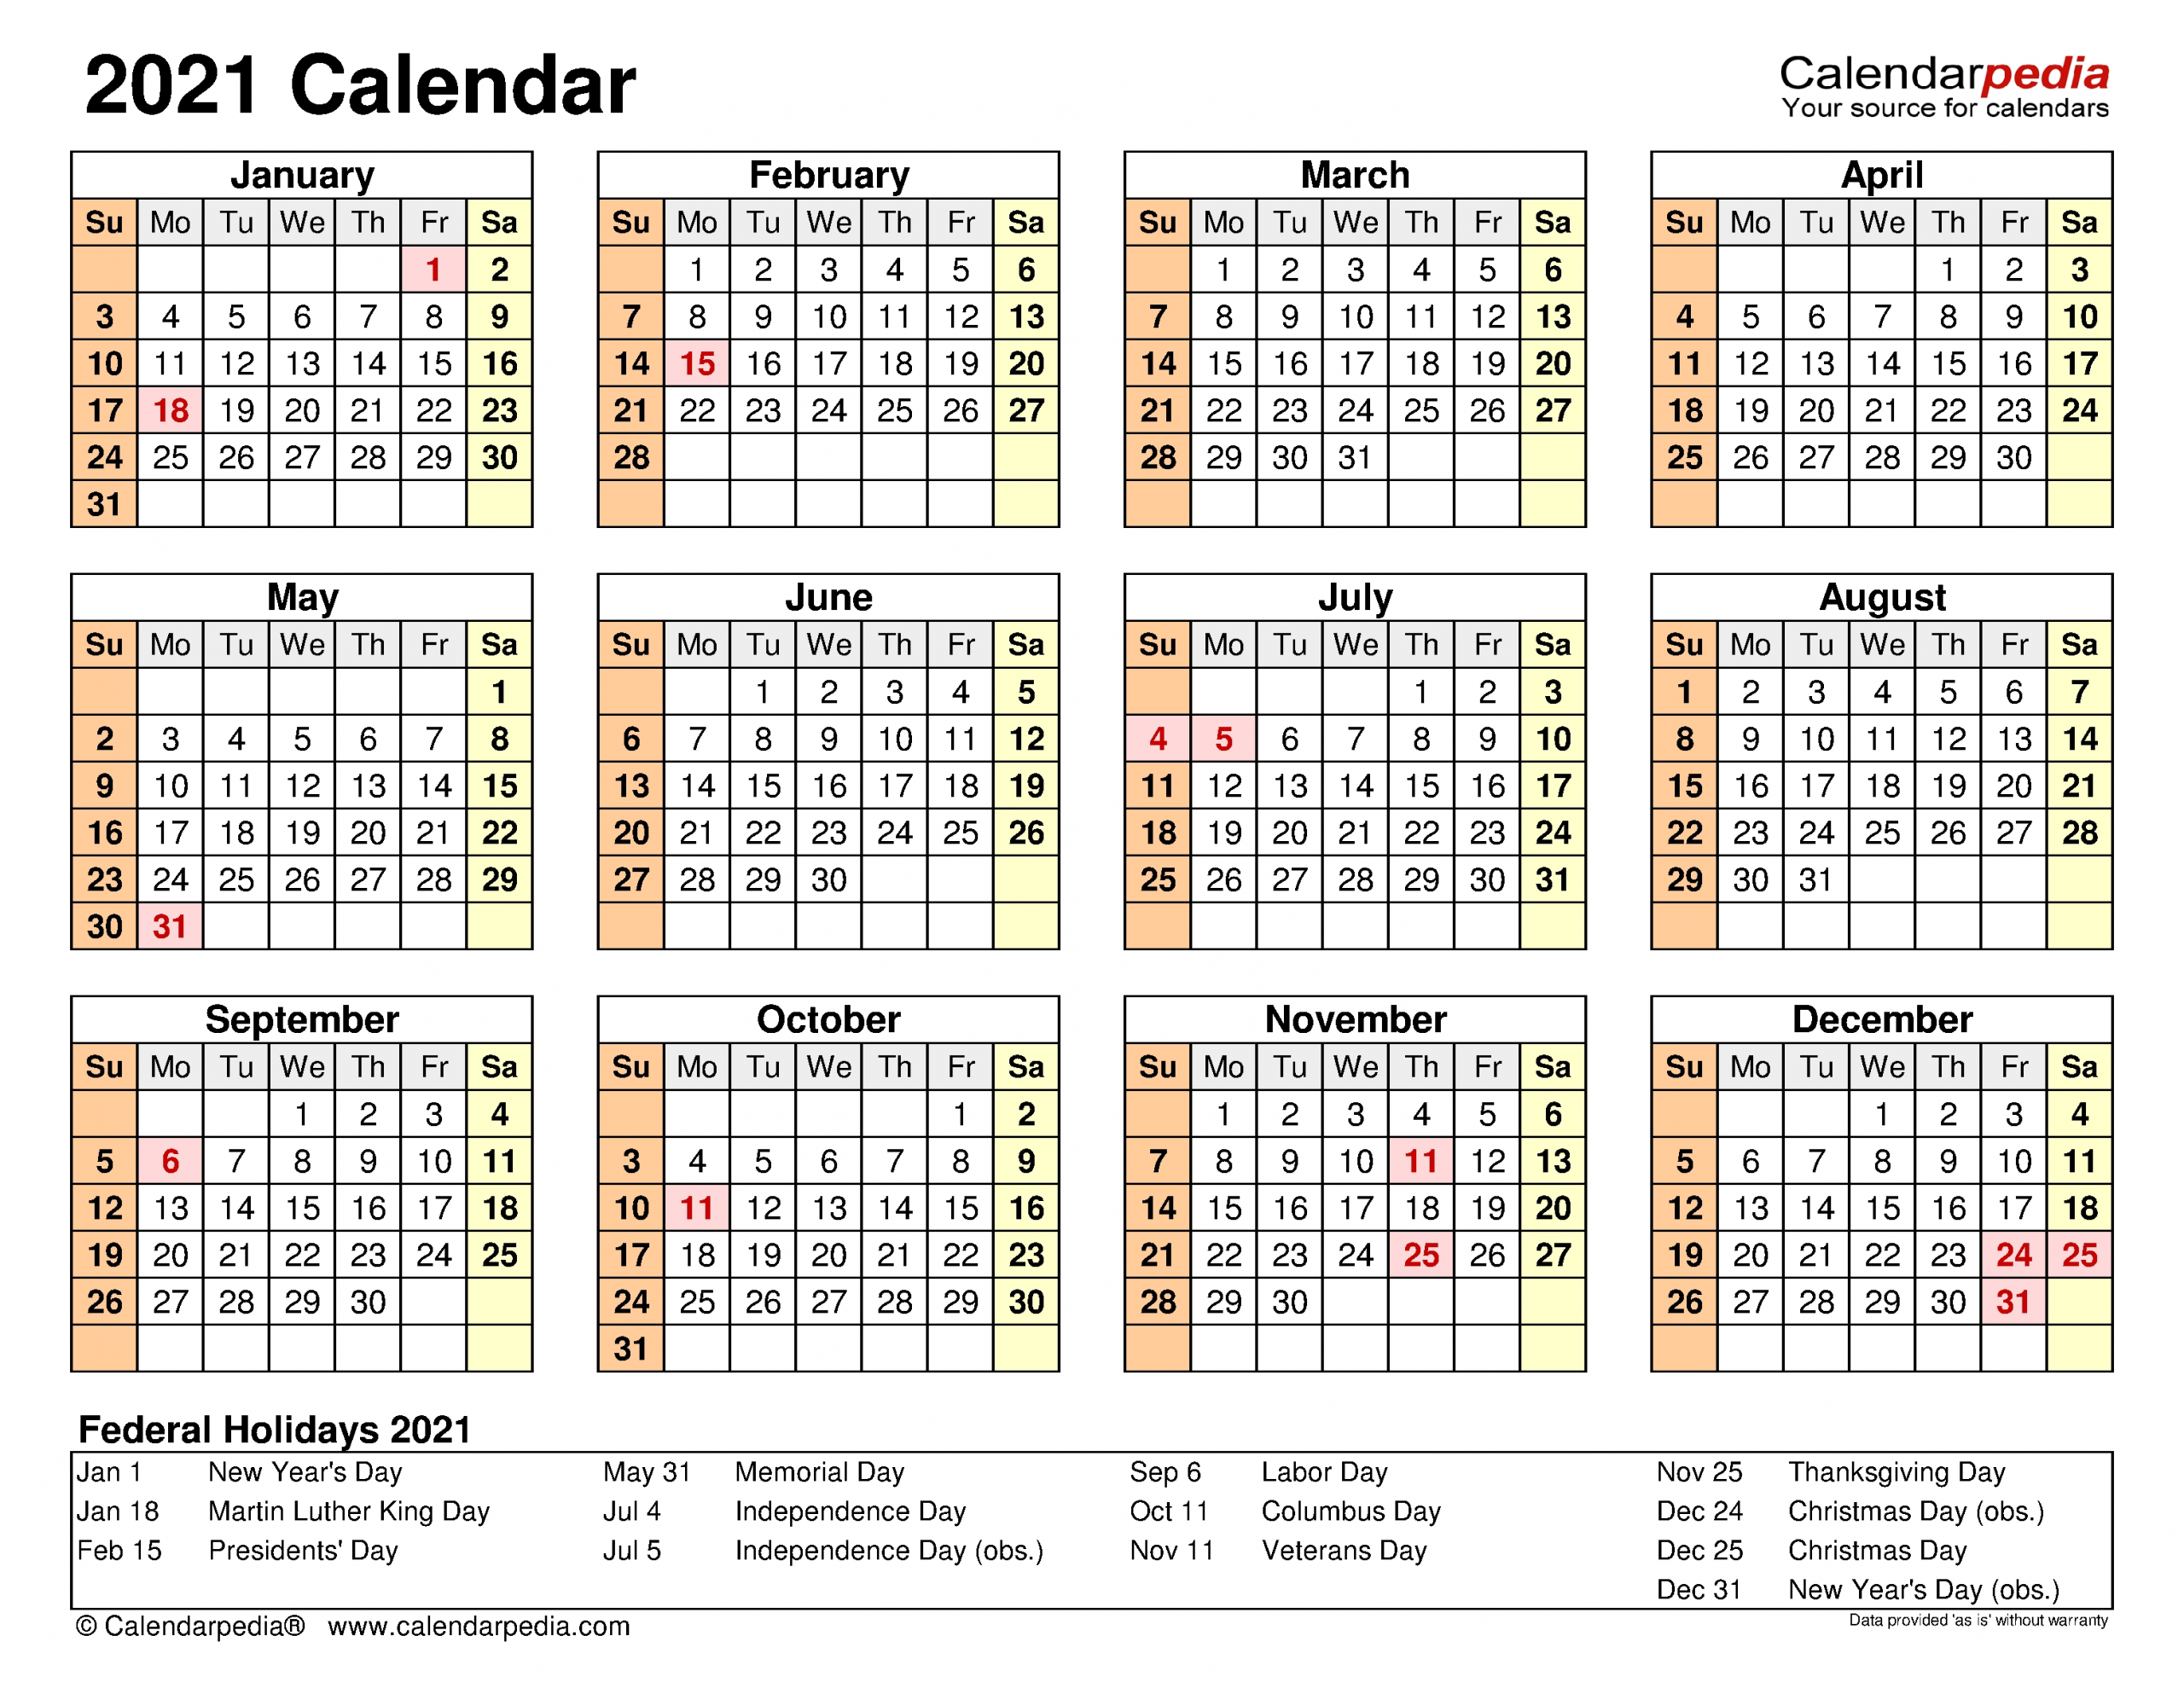 2021 Calendar - Free Printable Word Templates - Calendarpedia